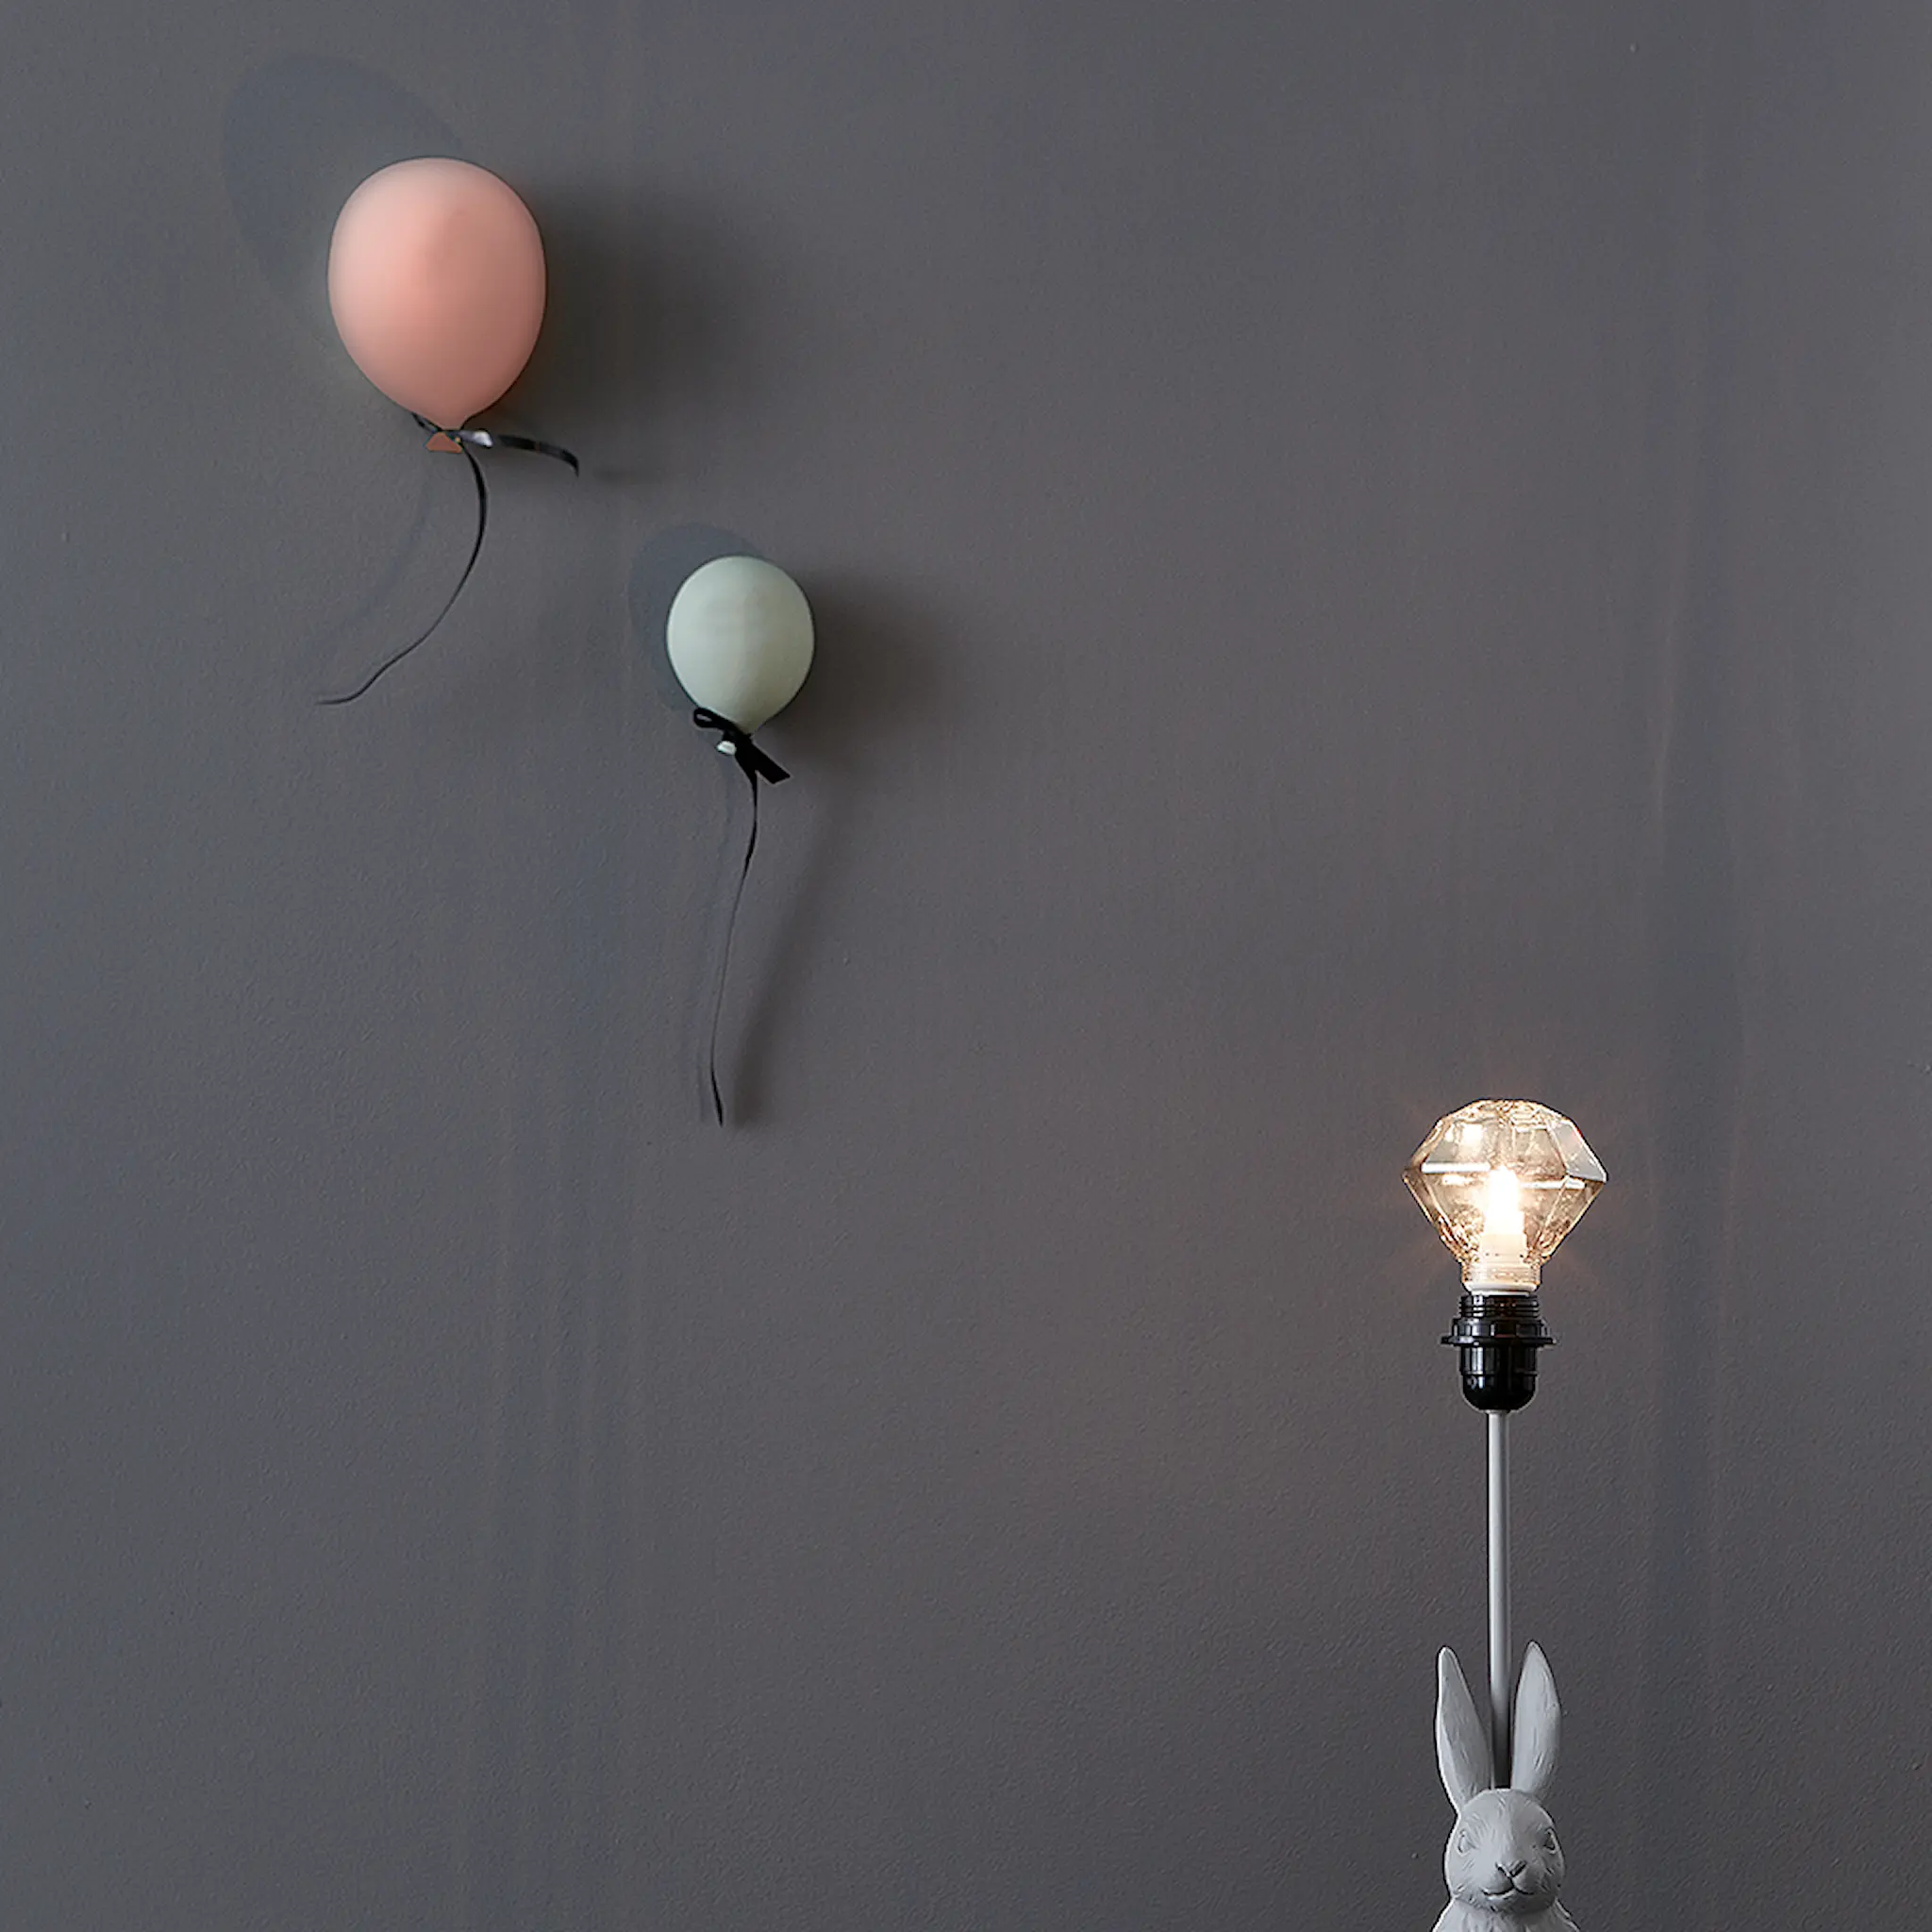 ByOn Balloon veggdekor 17x23 cm rosa